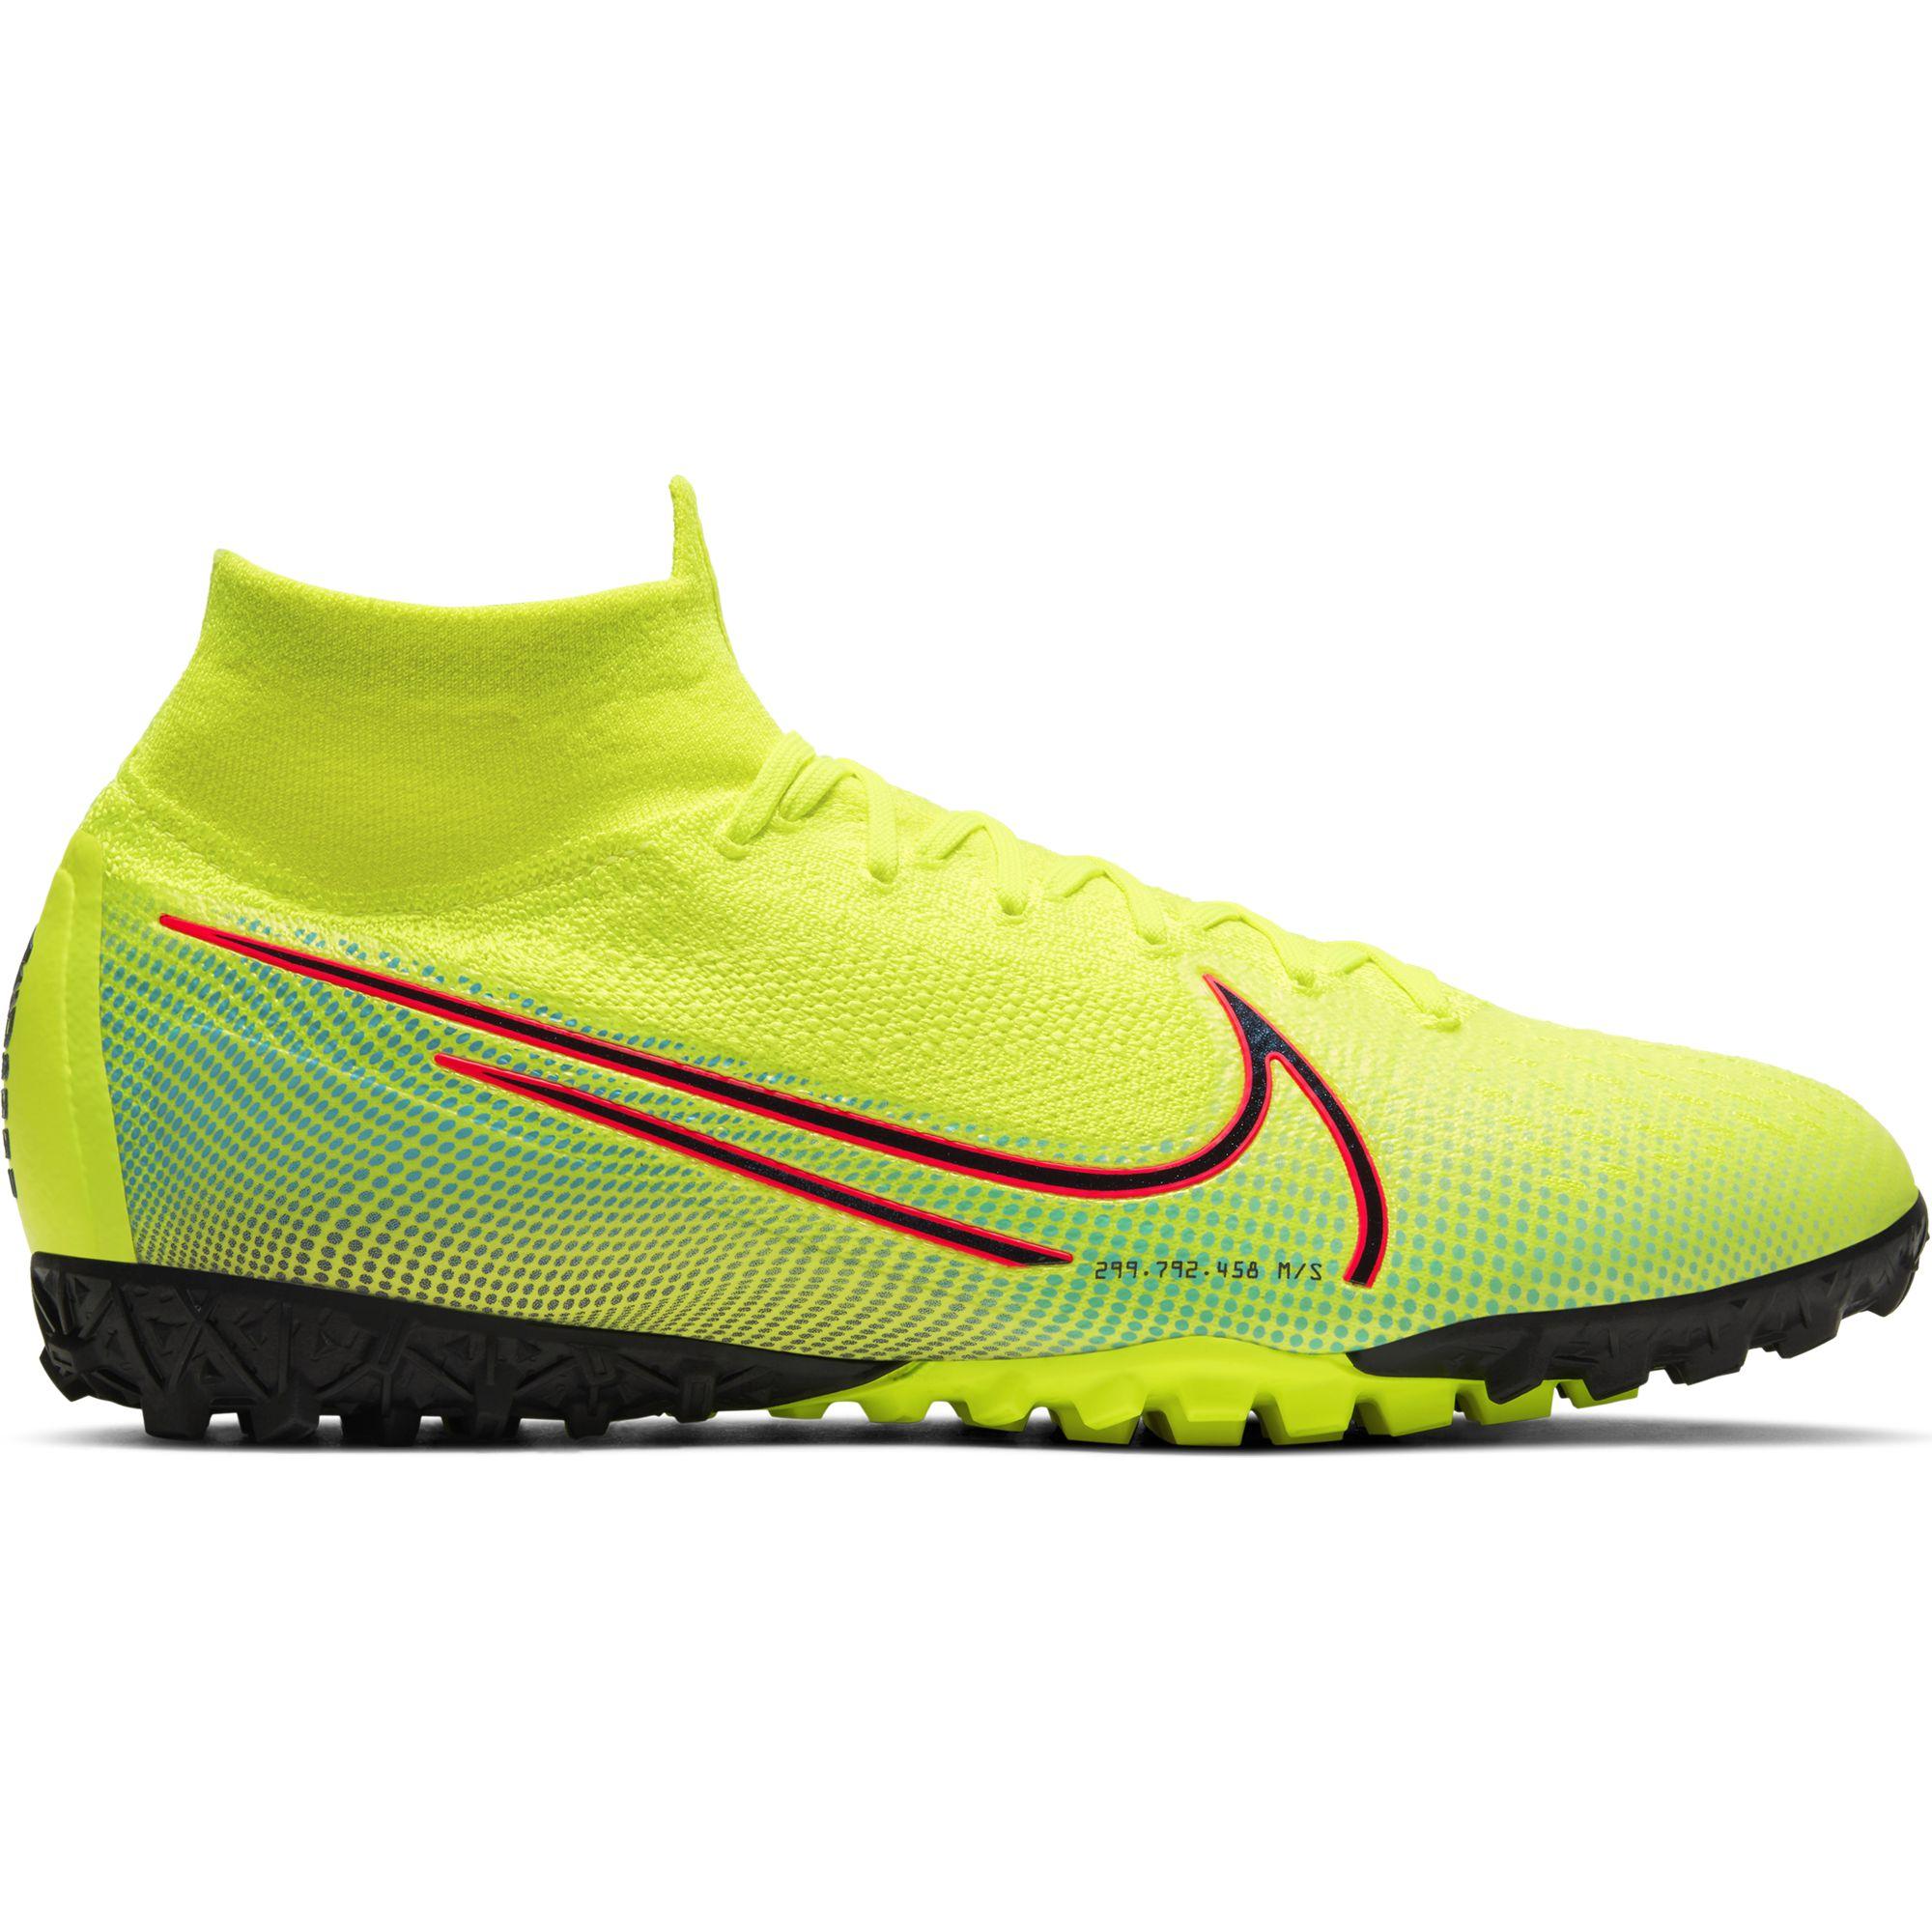 2020 Nike Mercurial Superfly VII Elite FG Yellow Orange Green